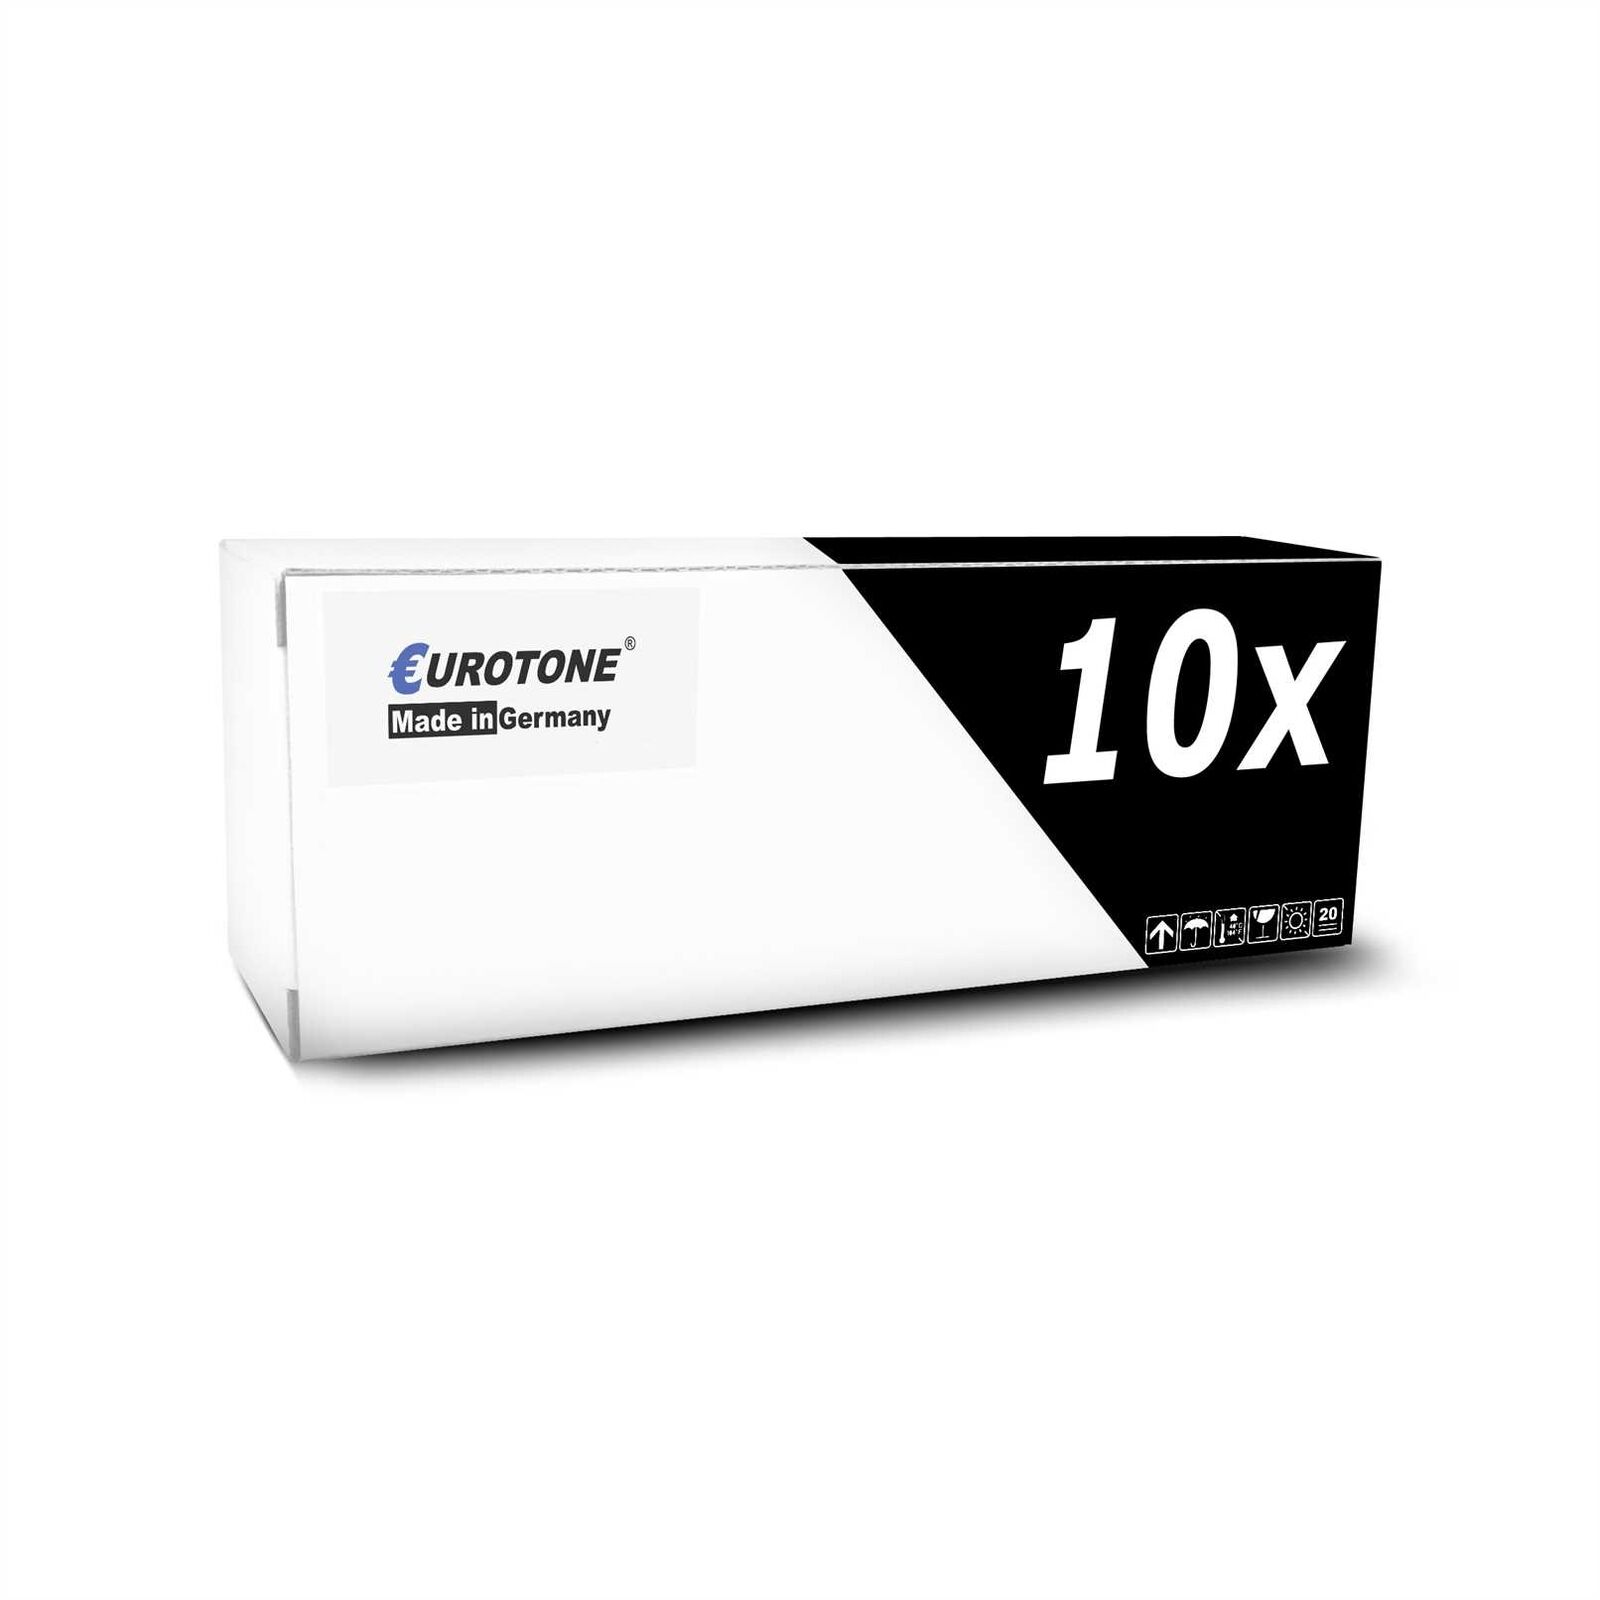 10x Toners Replaces Lexmark